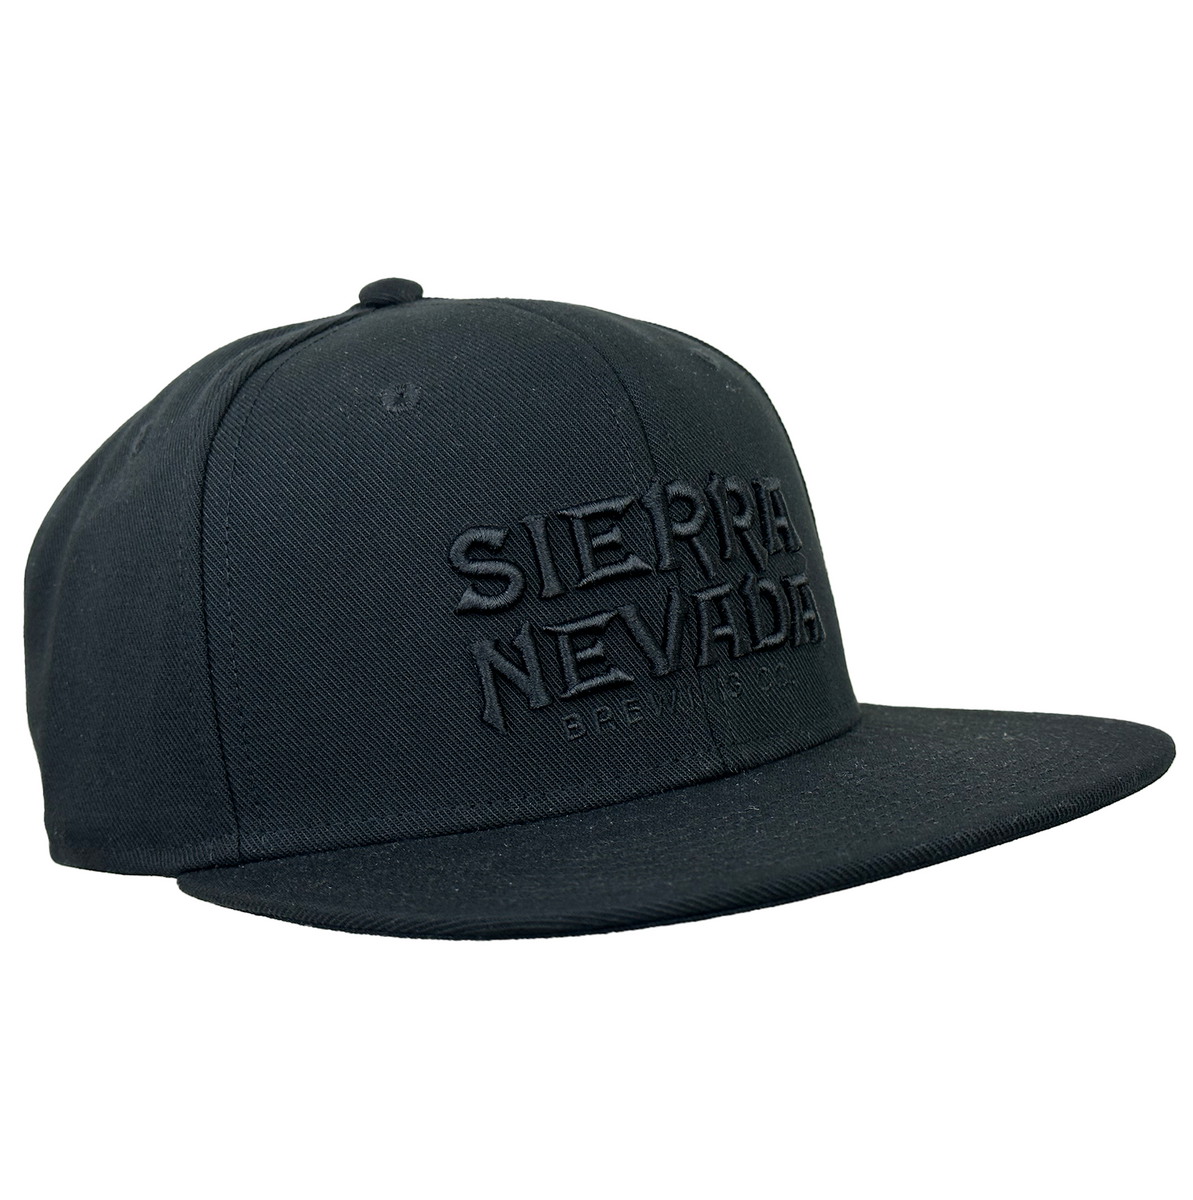 Sierra Nevada Stacked Text Hat Black